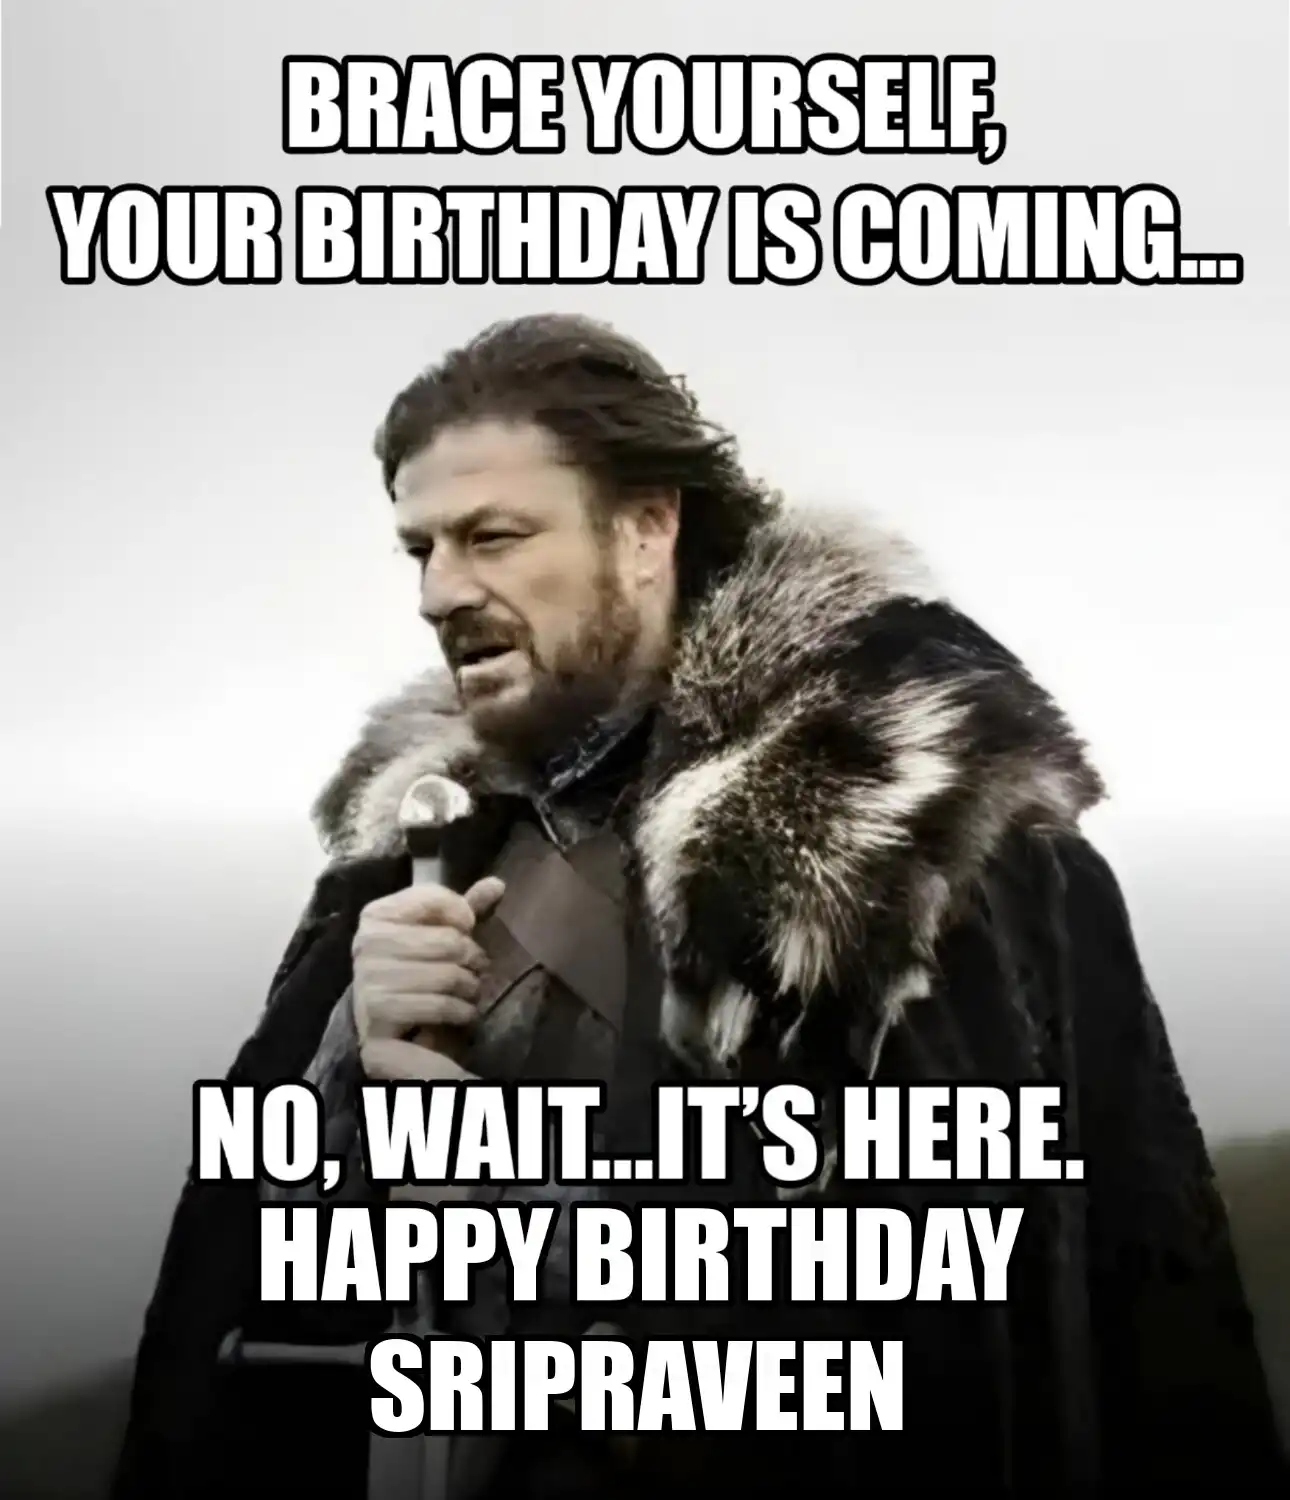 Happy Birthday Sripraveen Brace Yourself Your Birthday Is Coming Meme